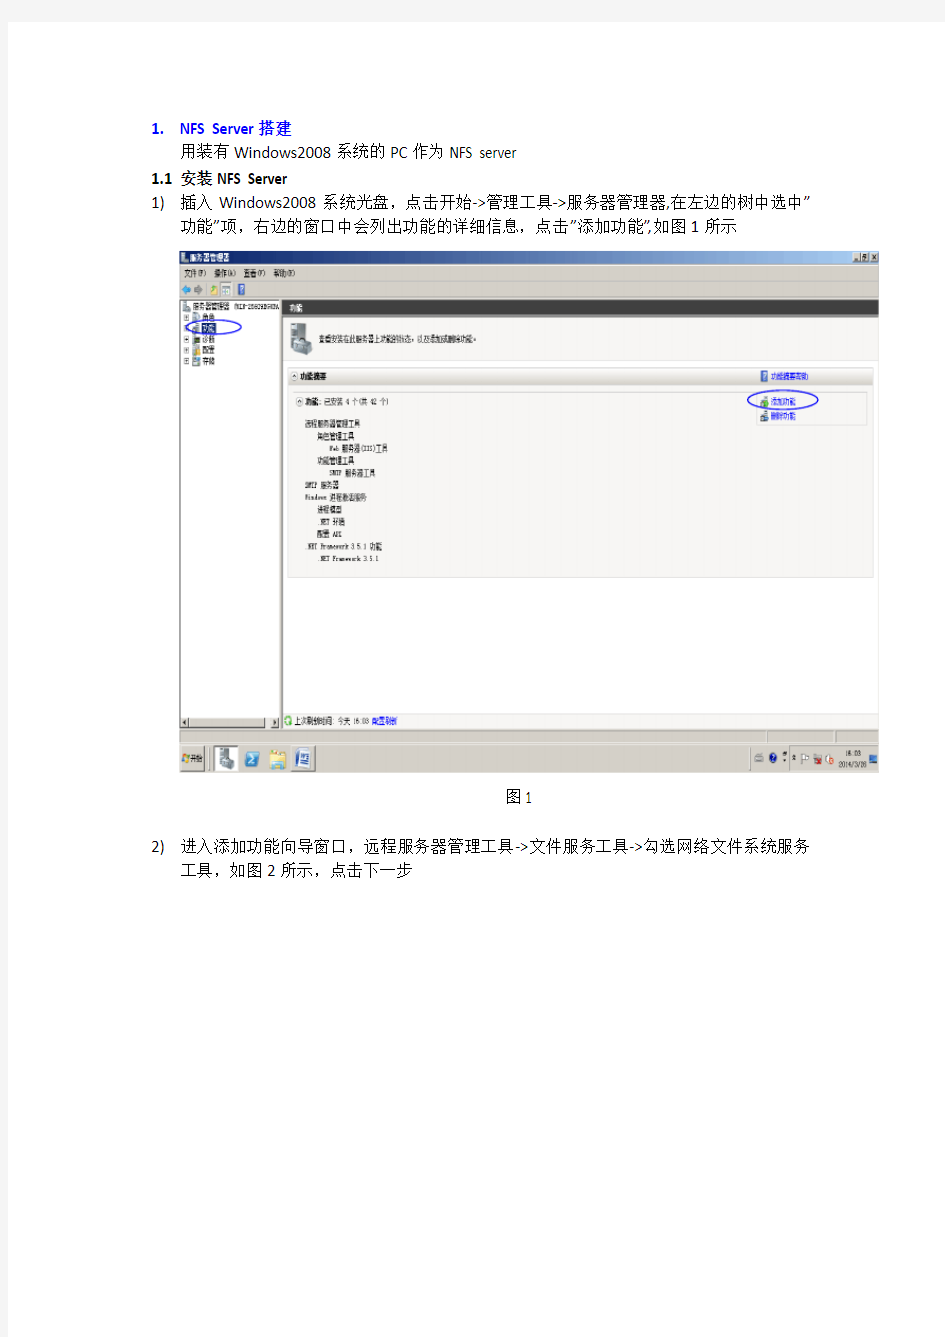 Windows 2008下NFS_Server搭建和使用